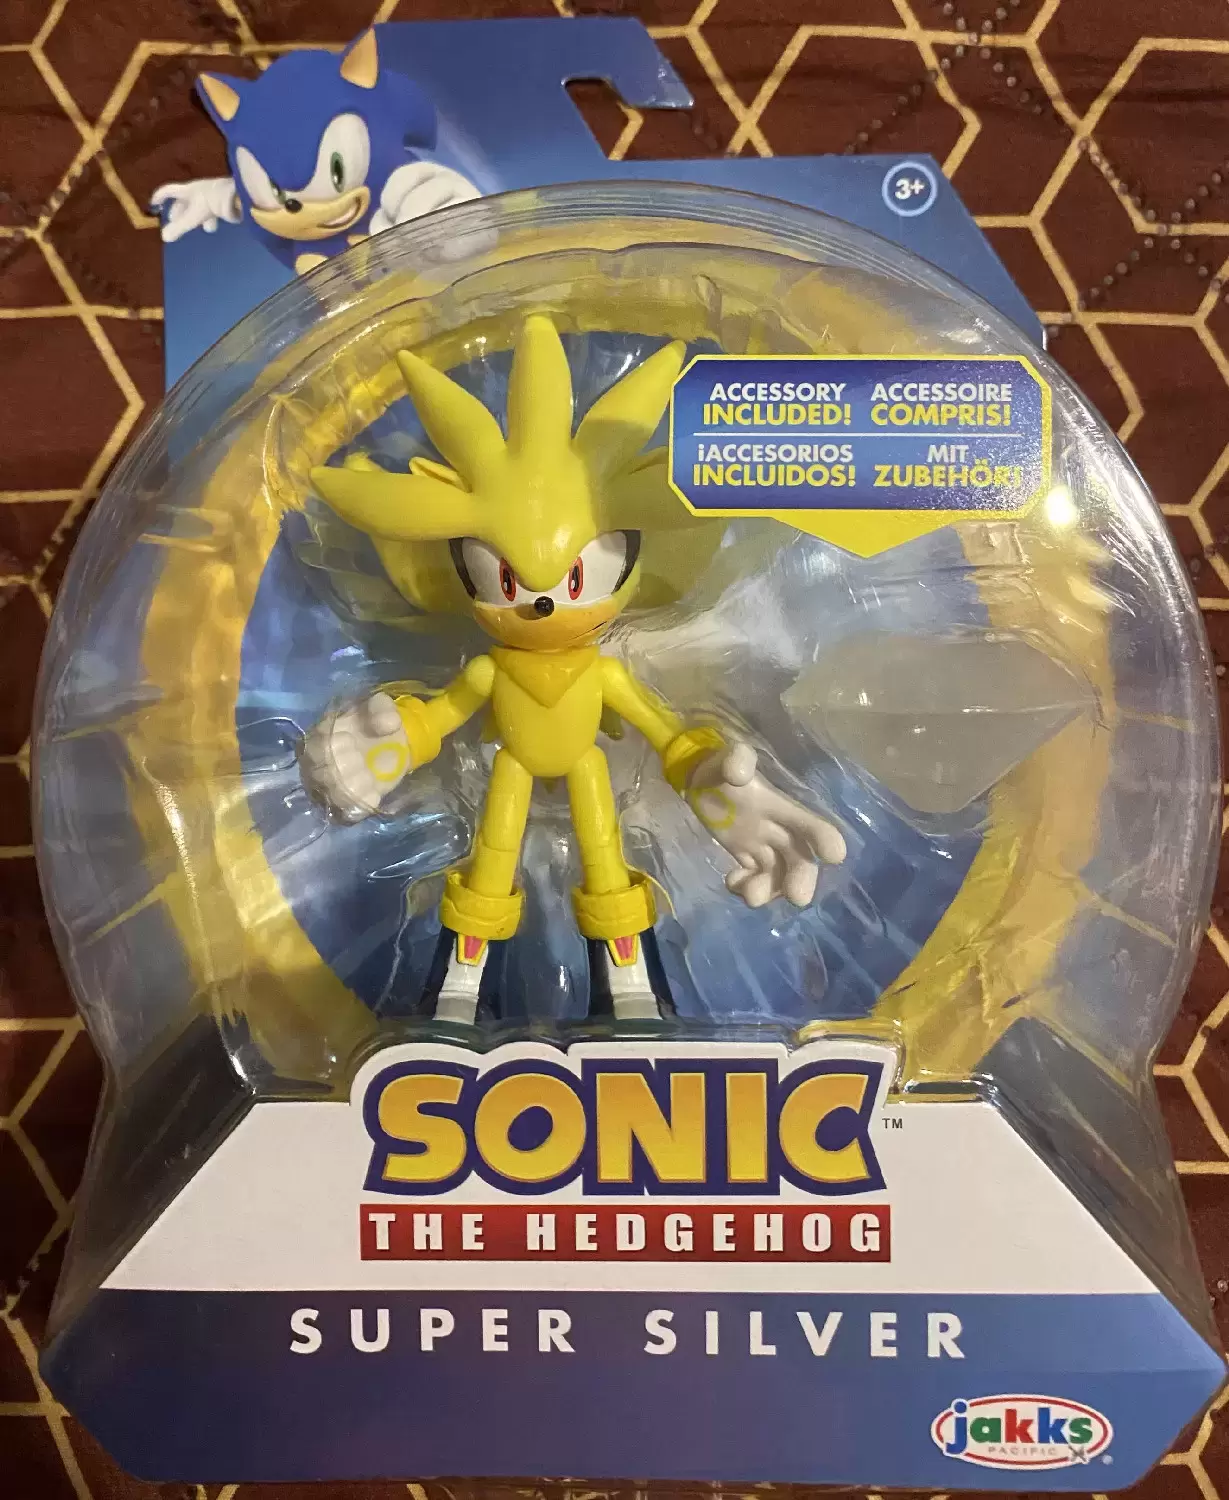 Jakks Pacific Sonic The Hedgehog - Super Silver